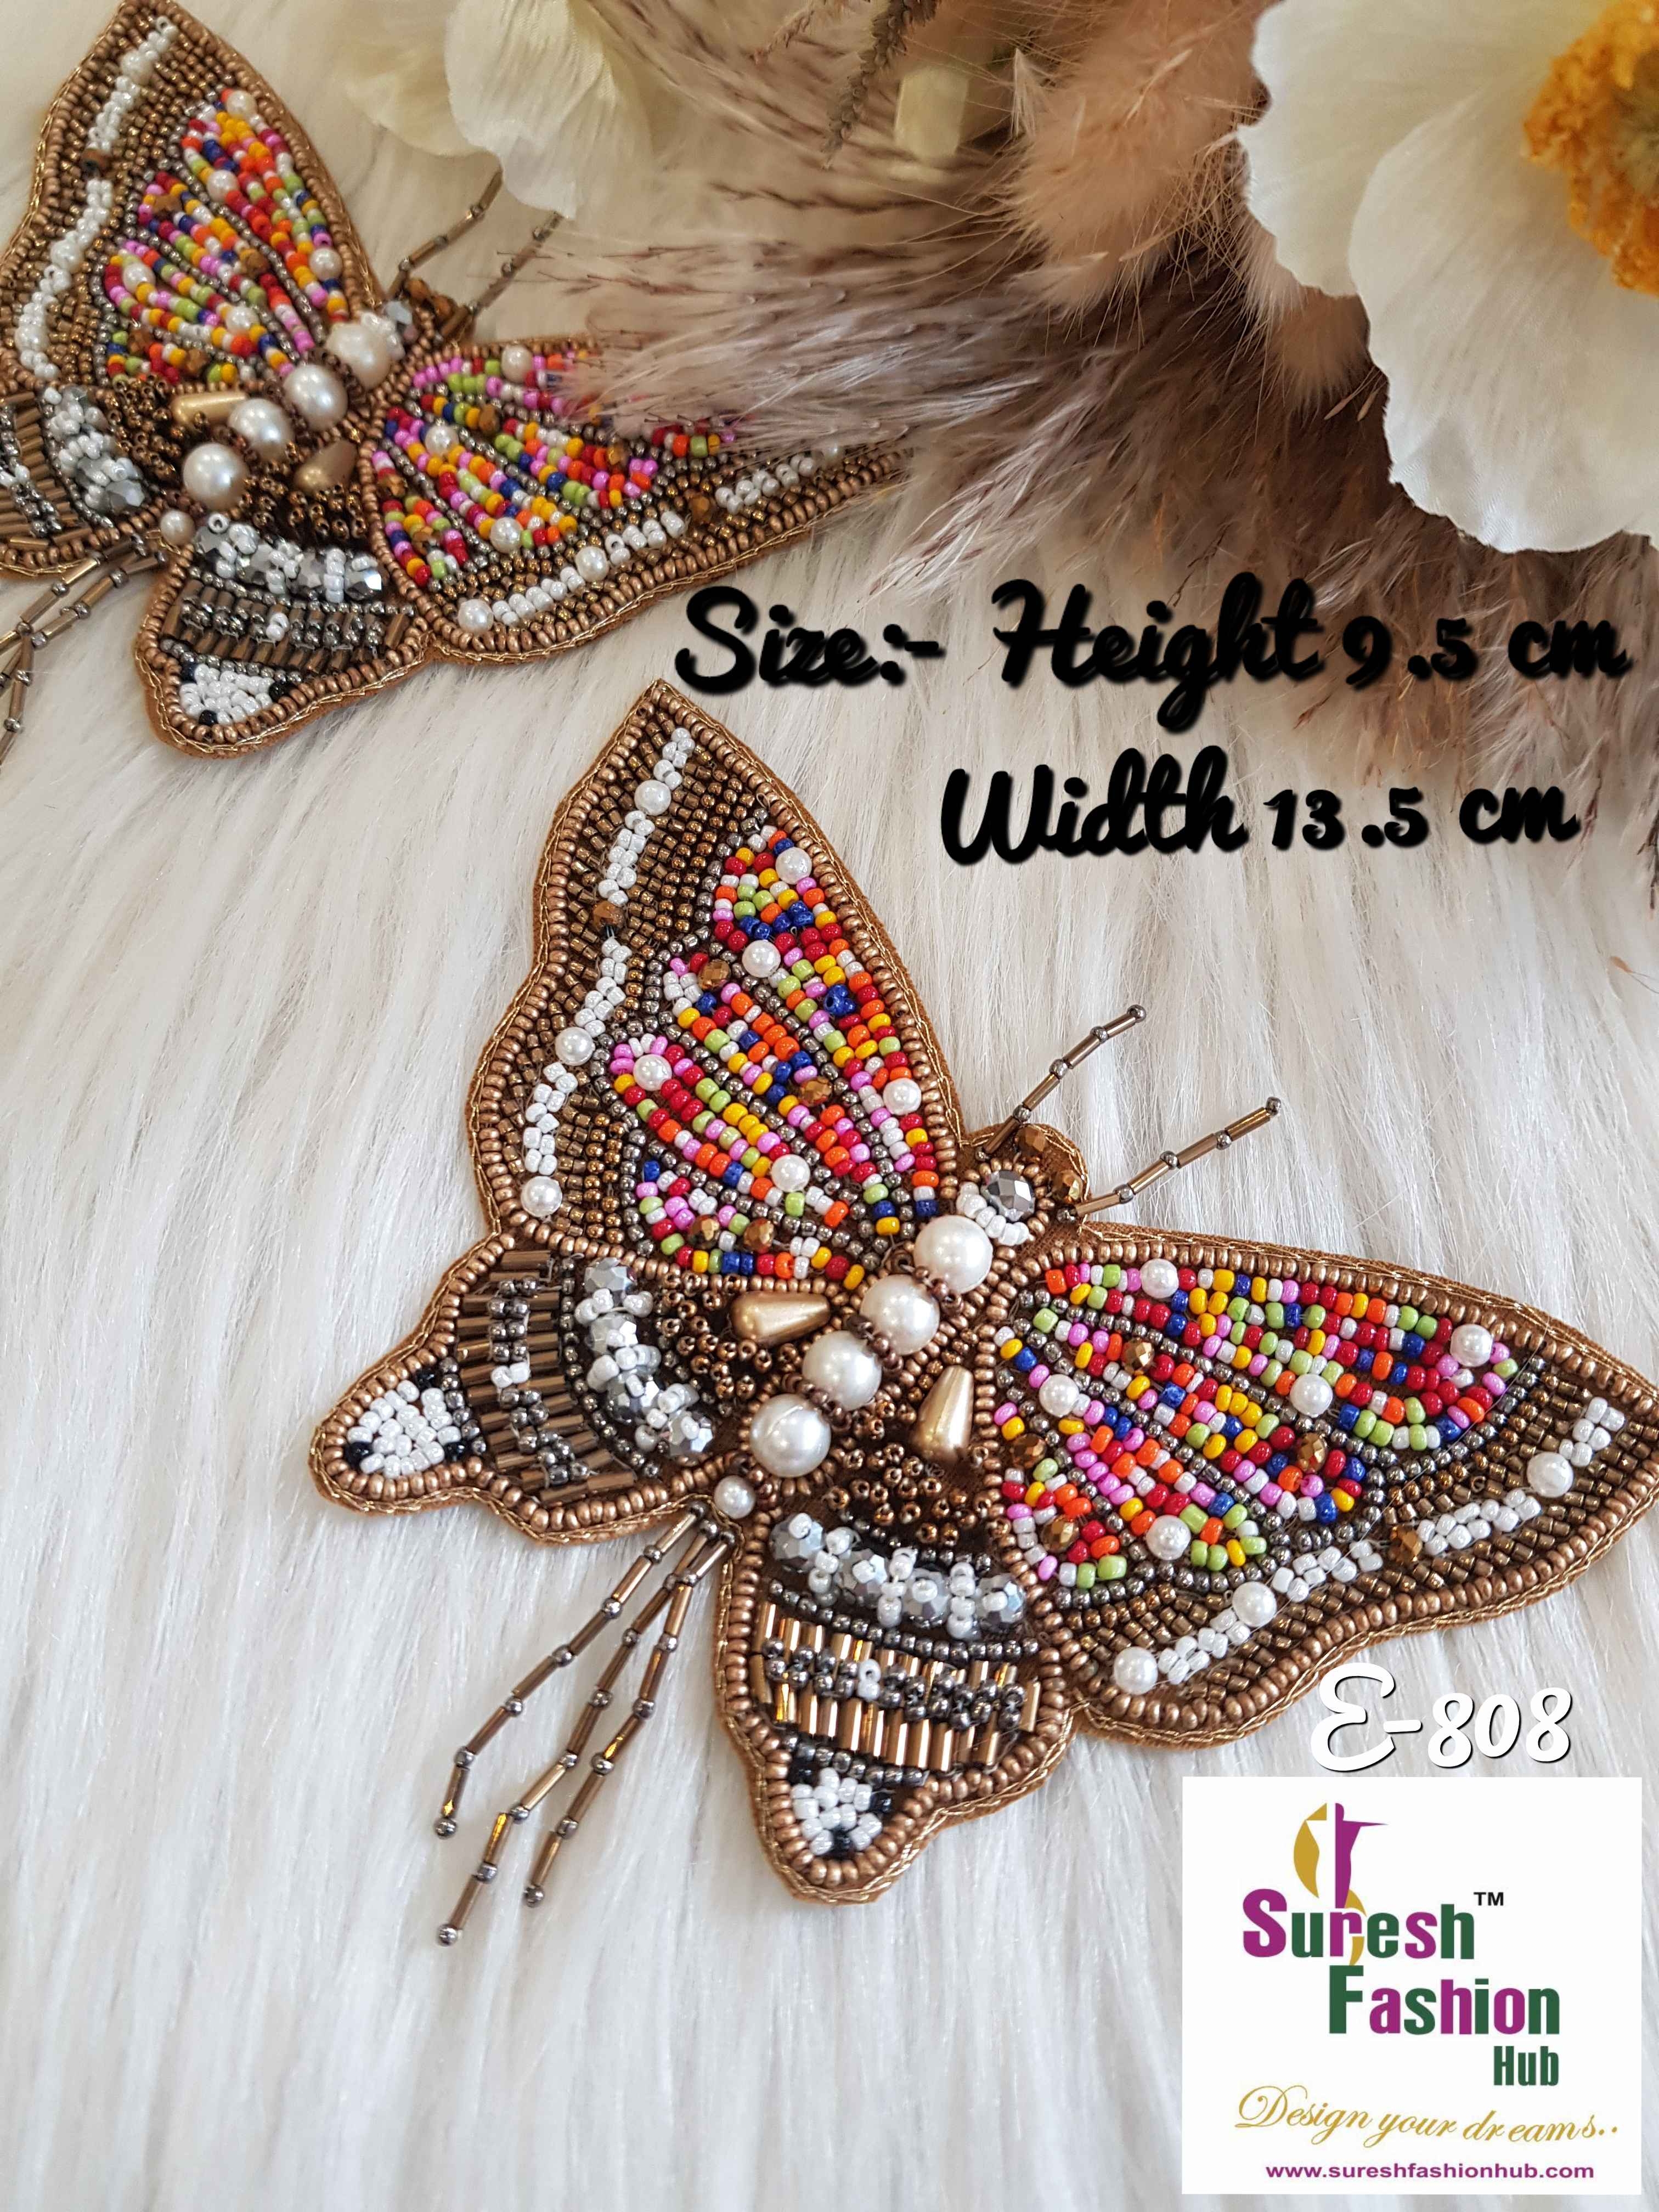 Multicolour Butterfly Acrylic Beads at Rs 135.00, Karam Pura, New Delhi